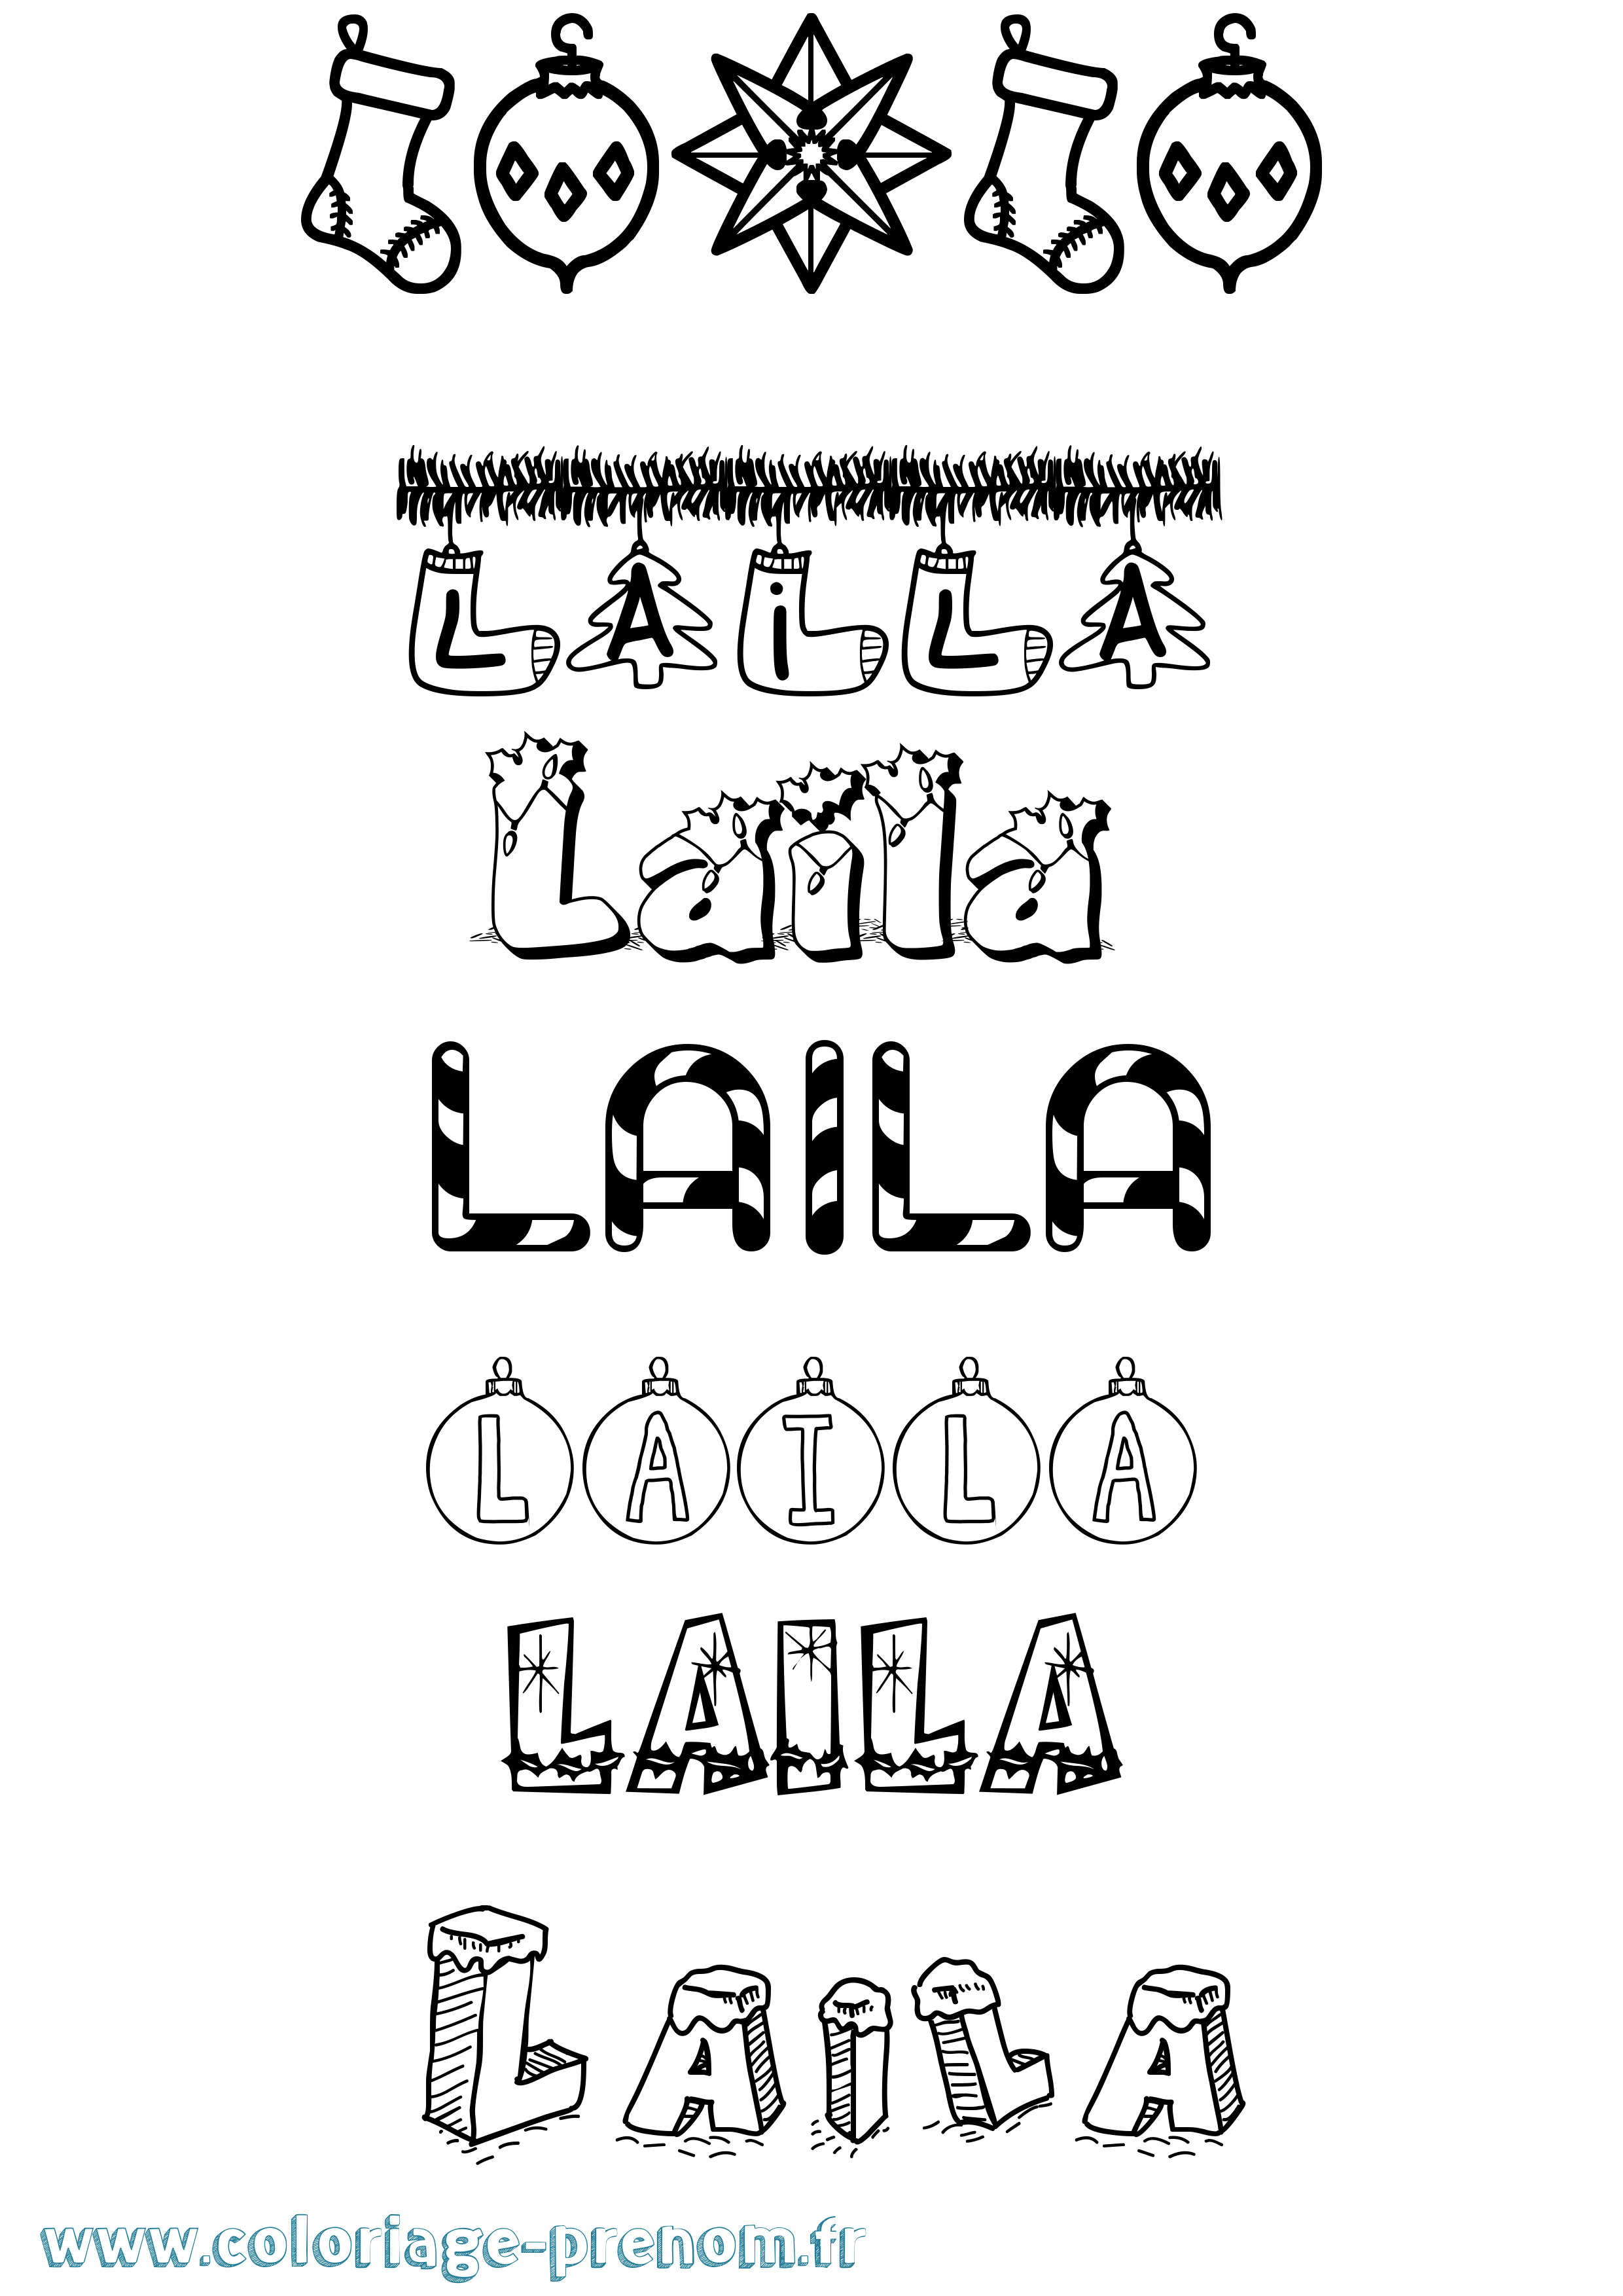 Coloriage prénom Laila Noël